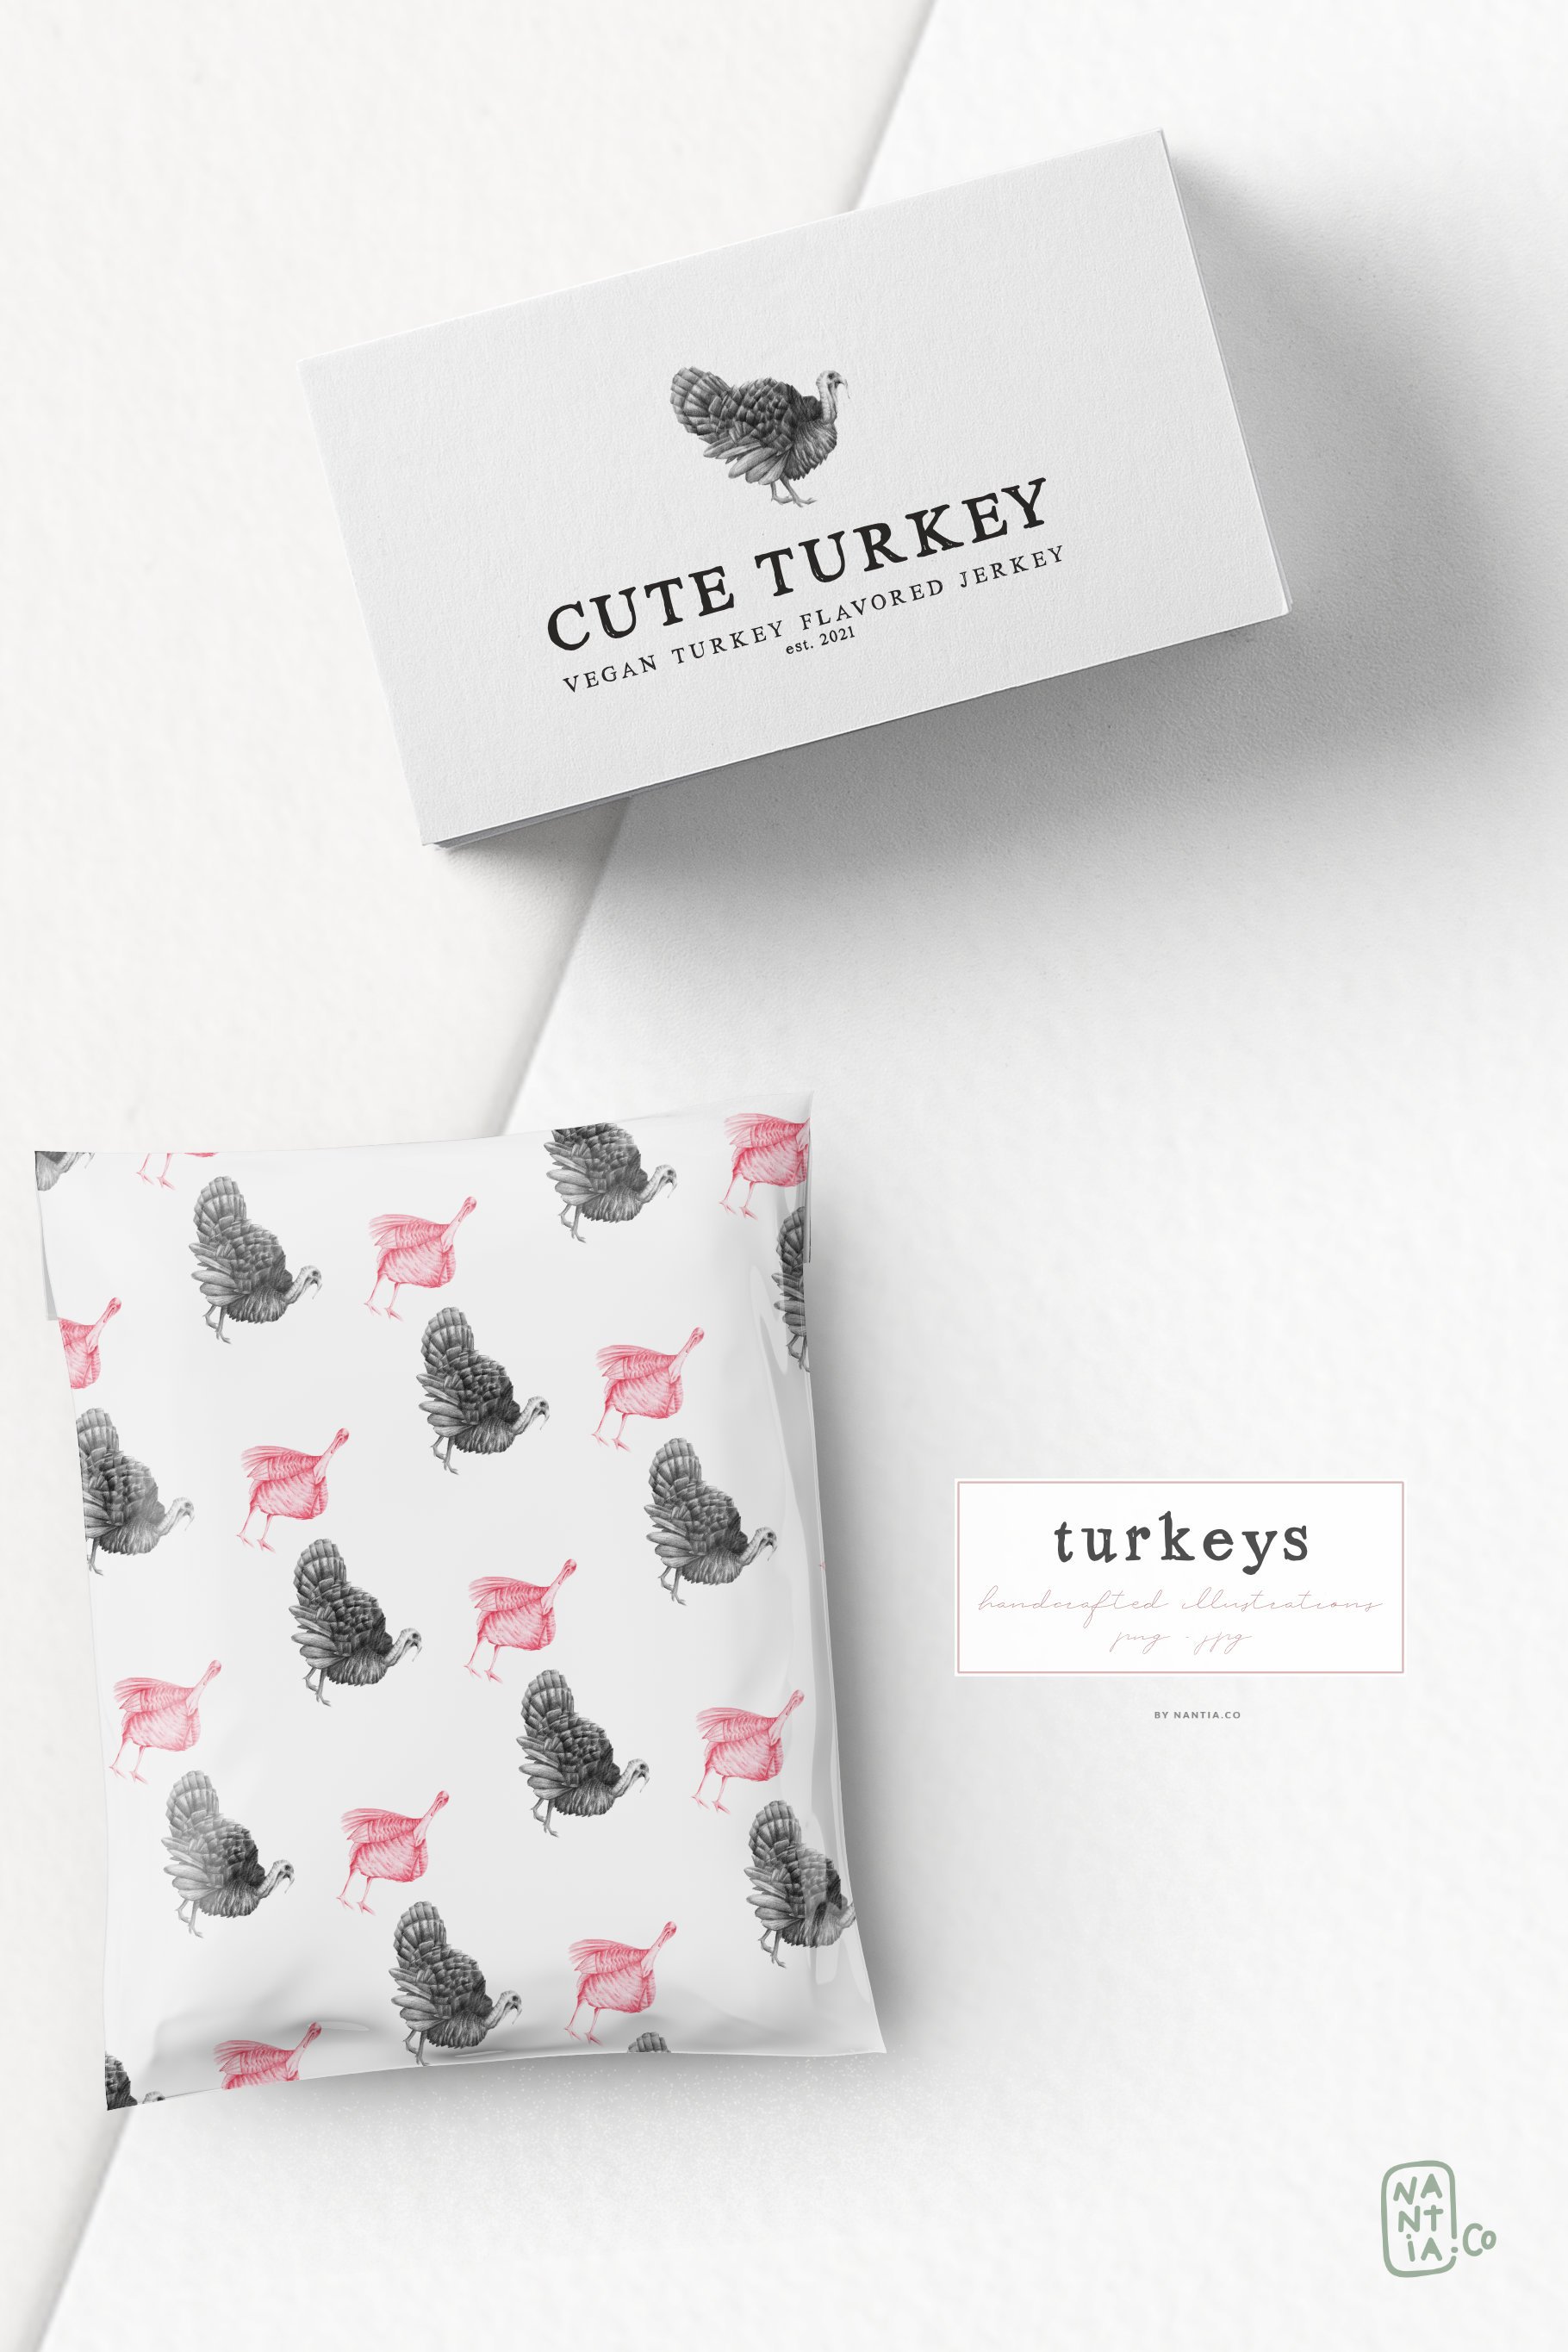 turkey handdrawn illustration nantiaco 9 865